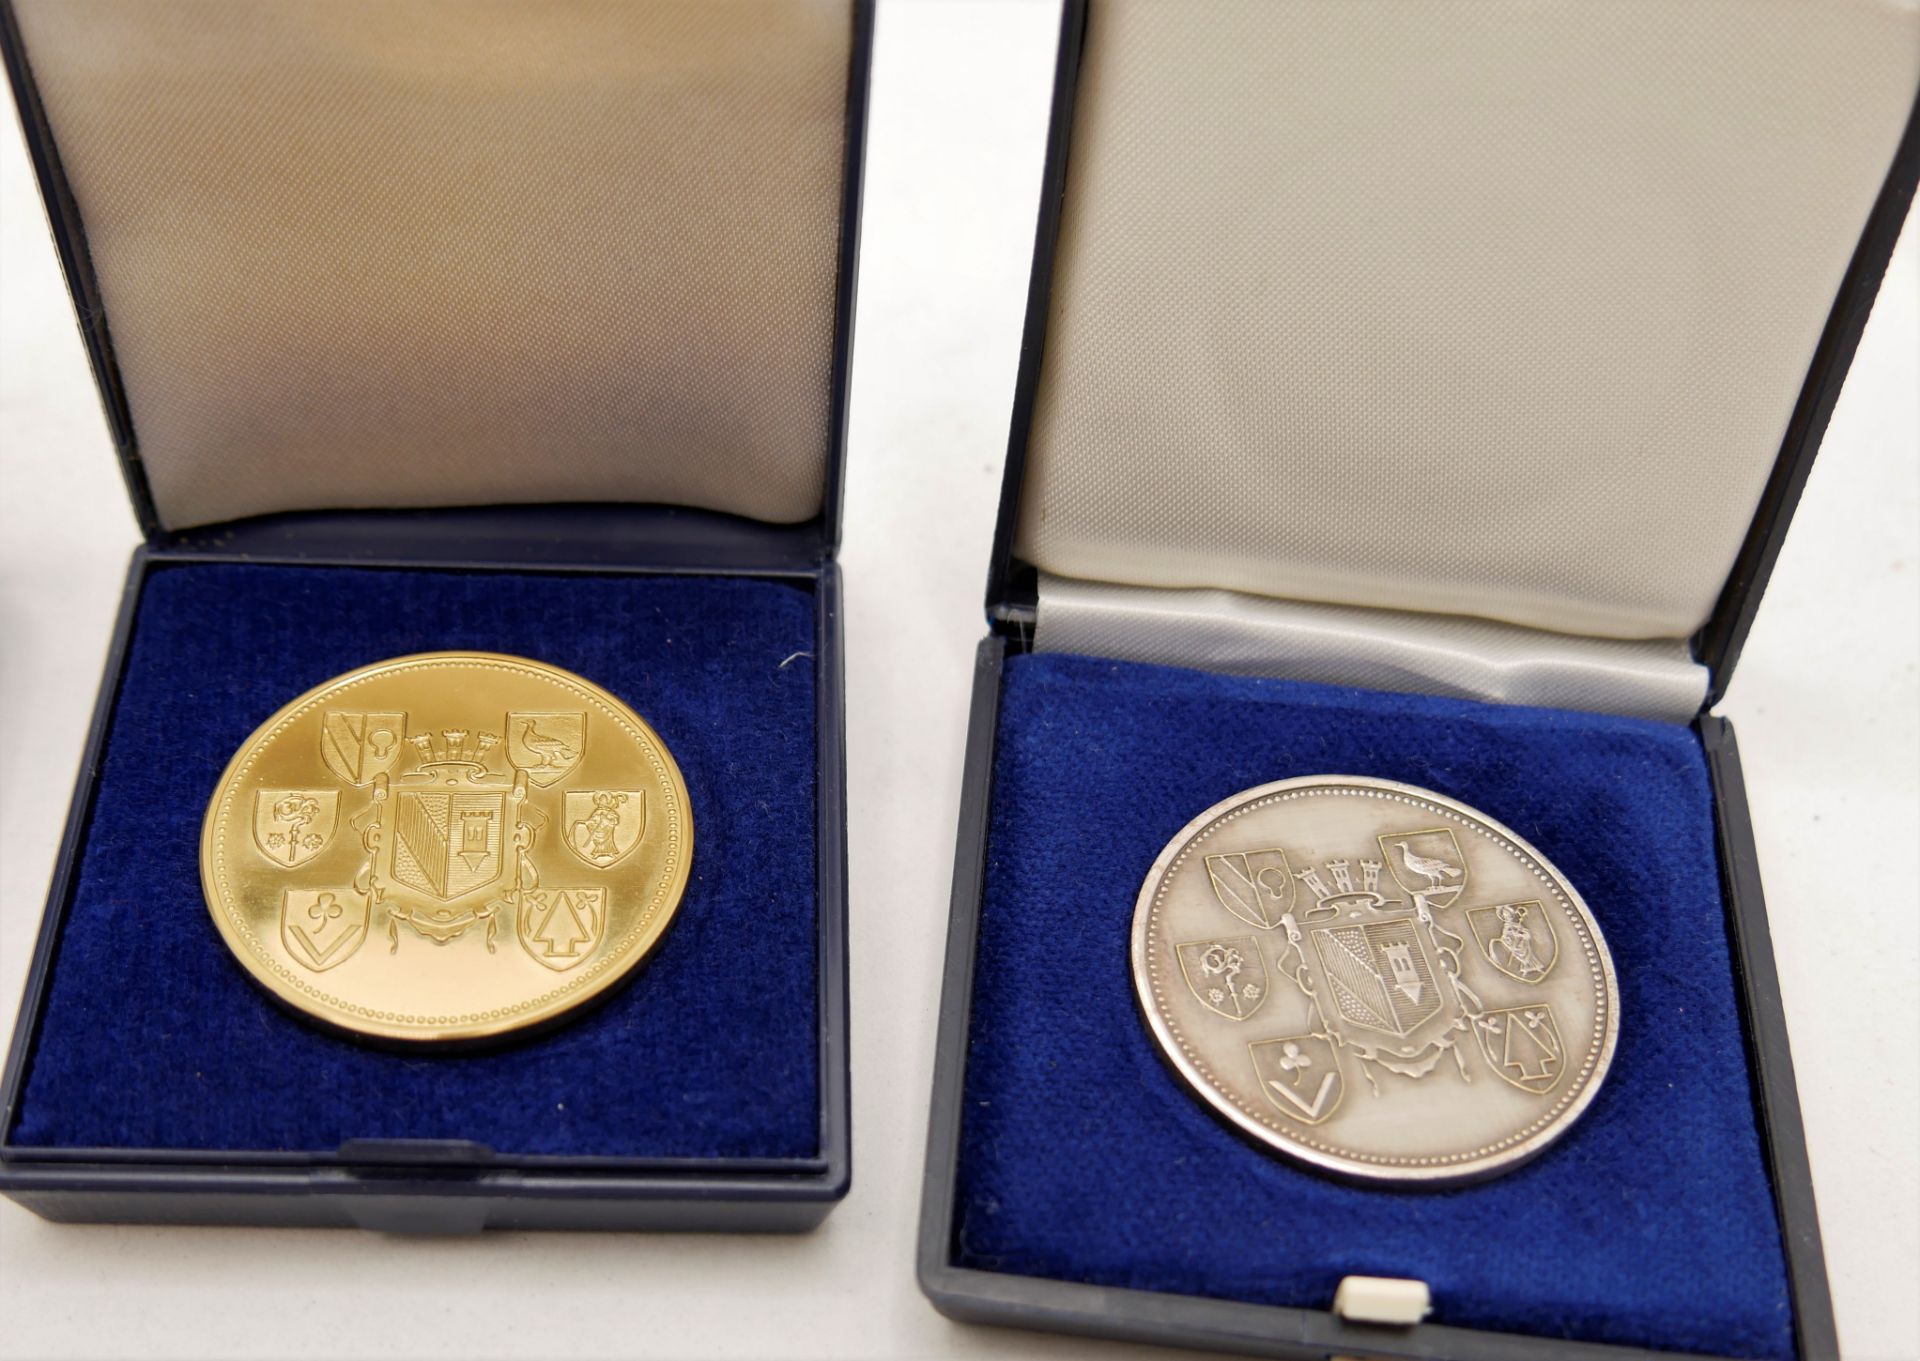 4 Medaillen Ettlingen, dabei 2x Silber alle im Etui - Image 4 of 4